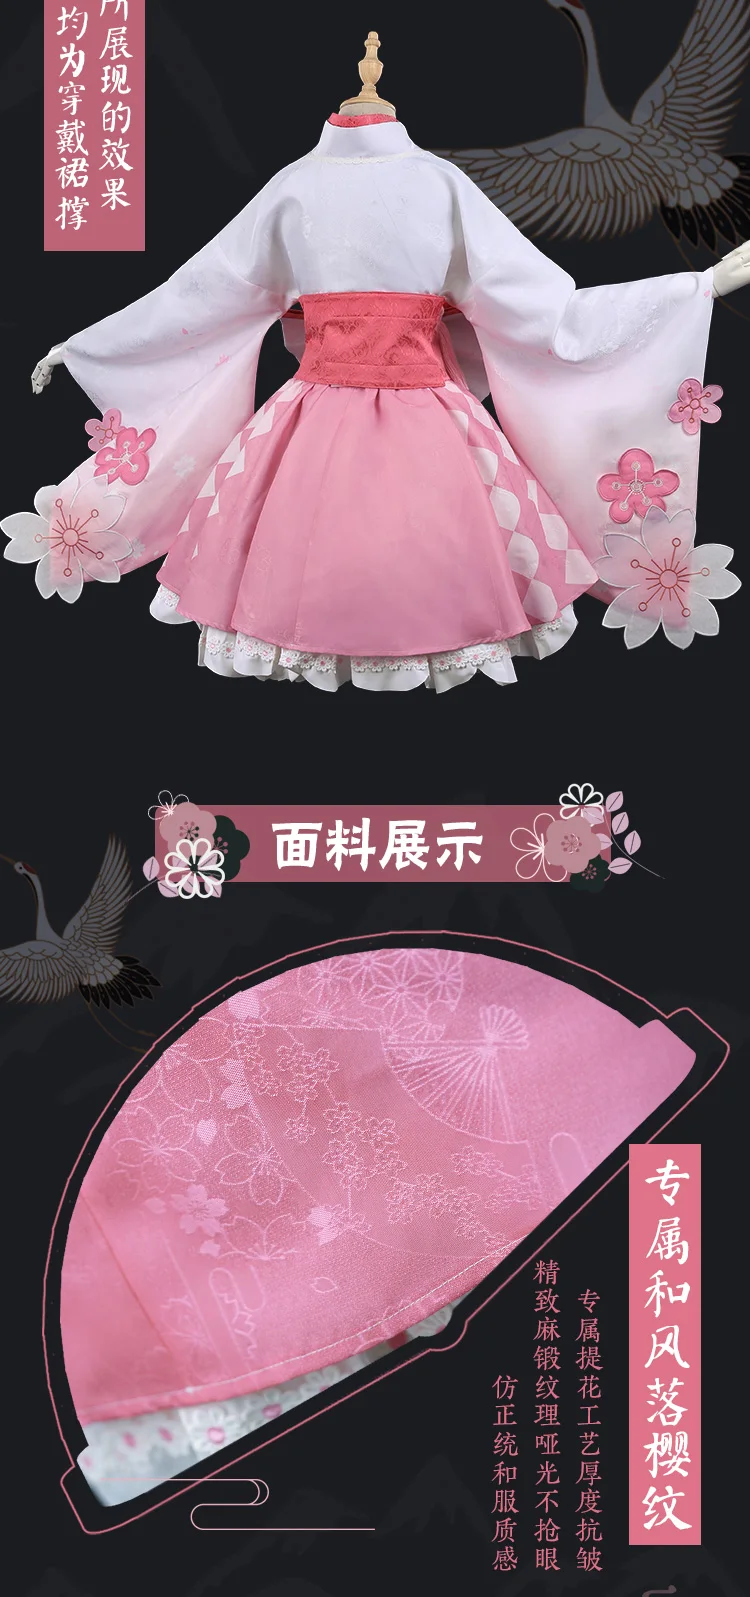 [Сток] Аниме Boku no Hero Academy очако урарака цветок фестиваль кимоно униформа Косплей Костюм Хэллоуин